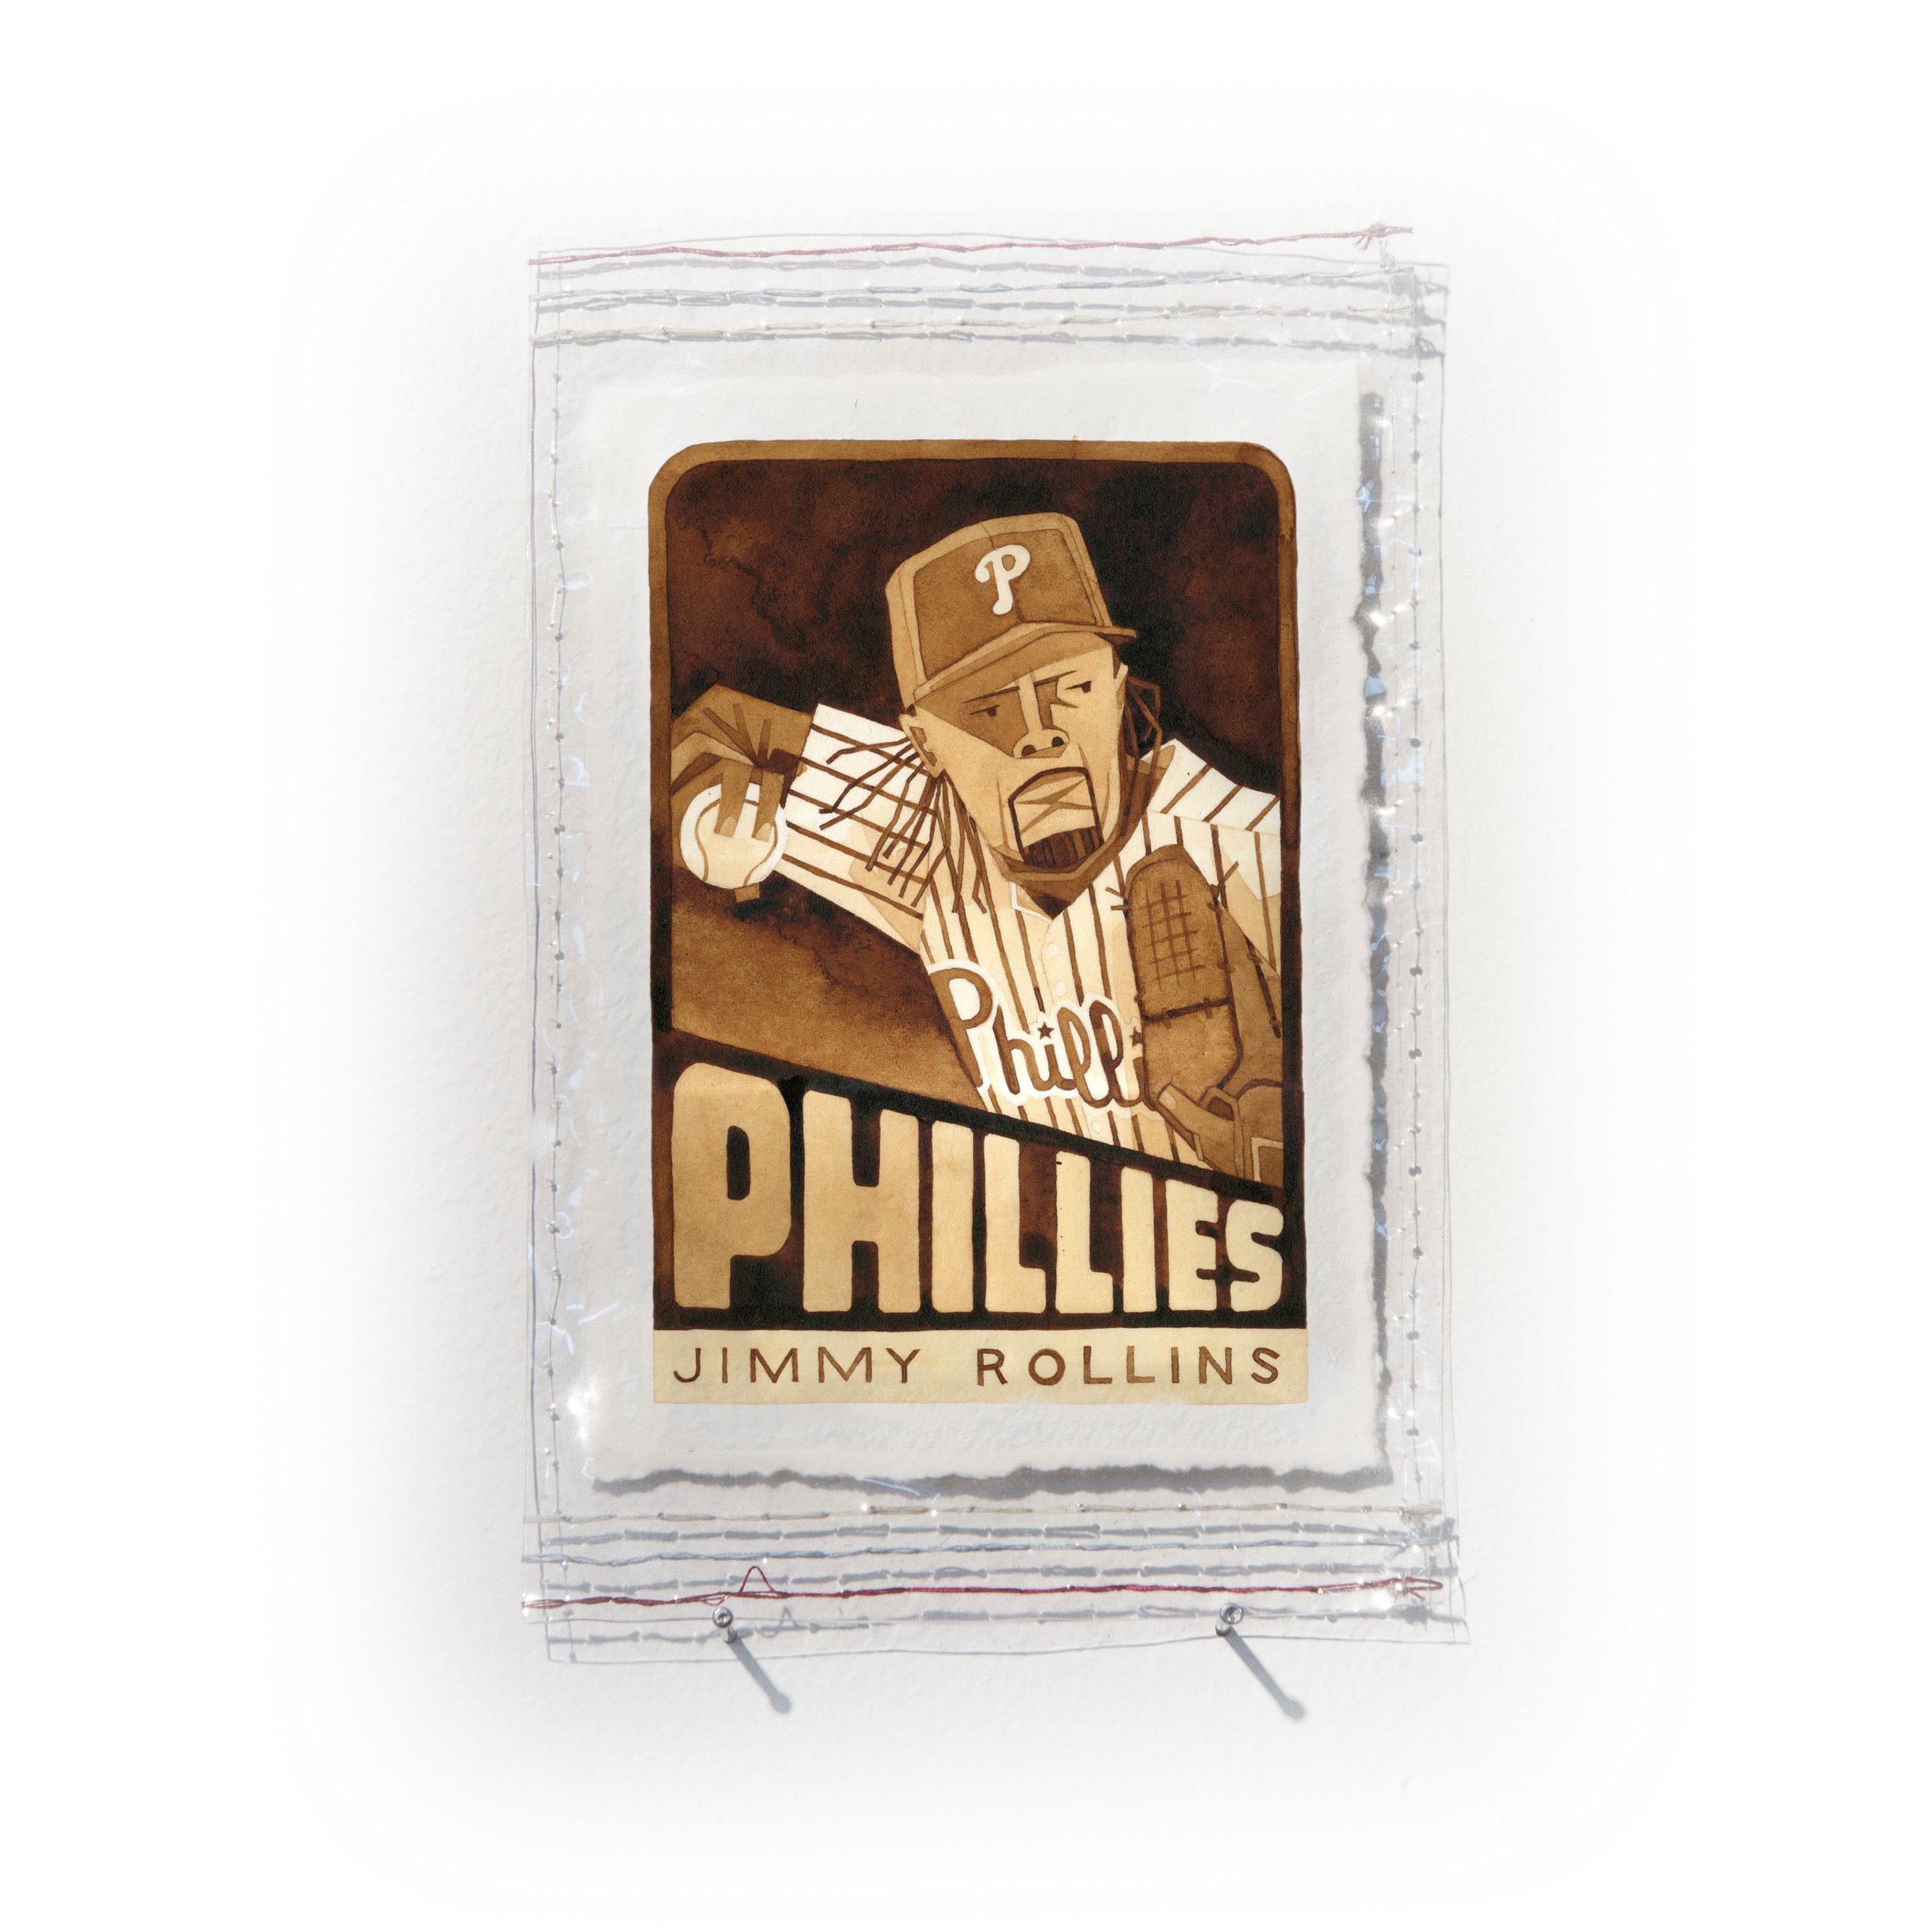 Jimmy Rollins of the Philadelphia Phillies